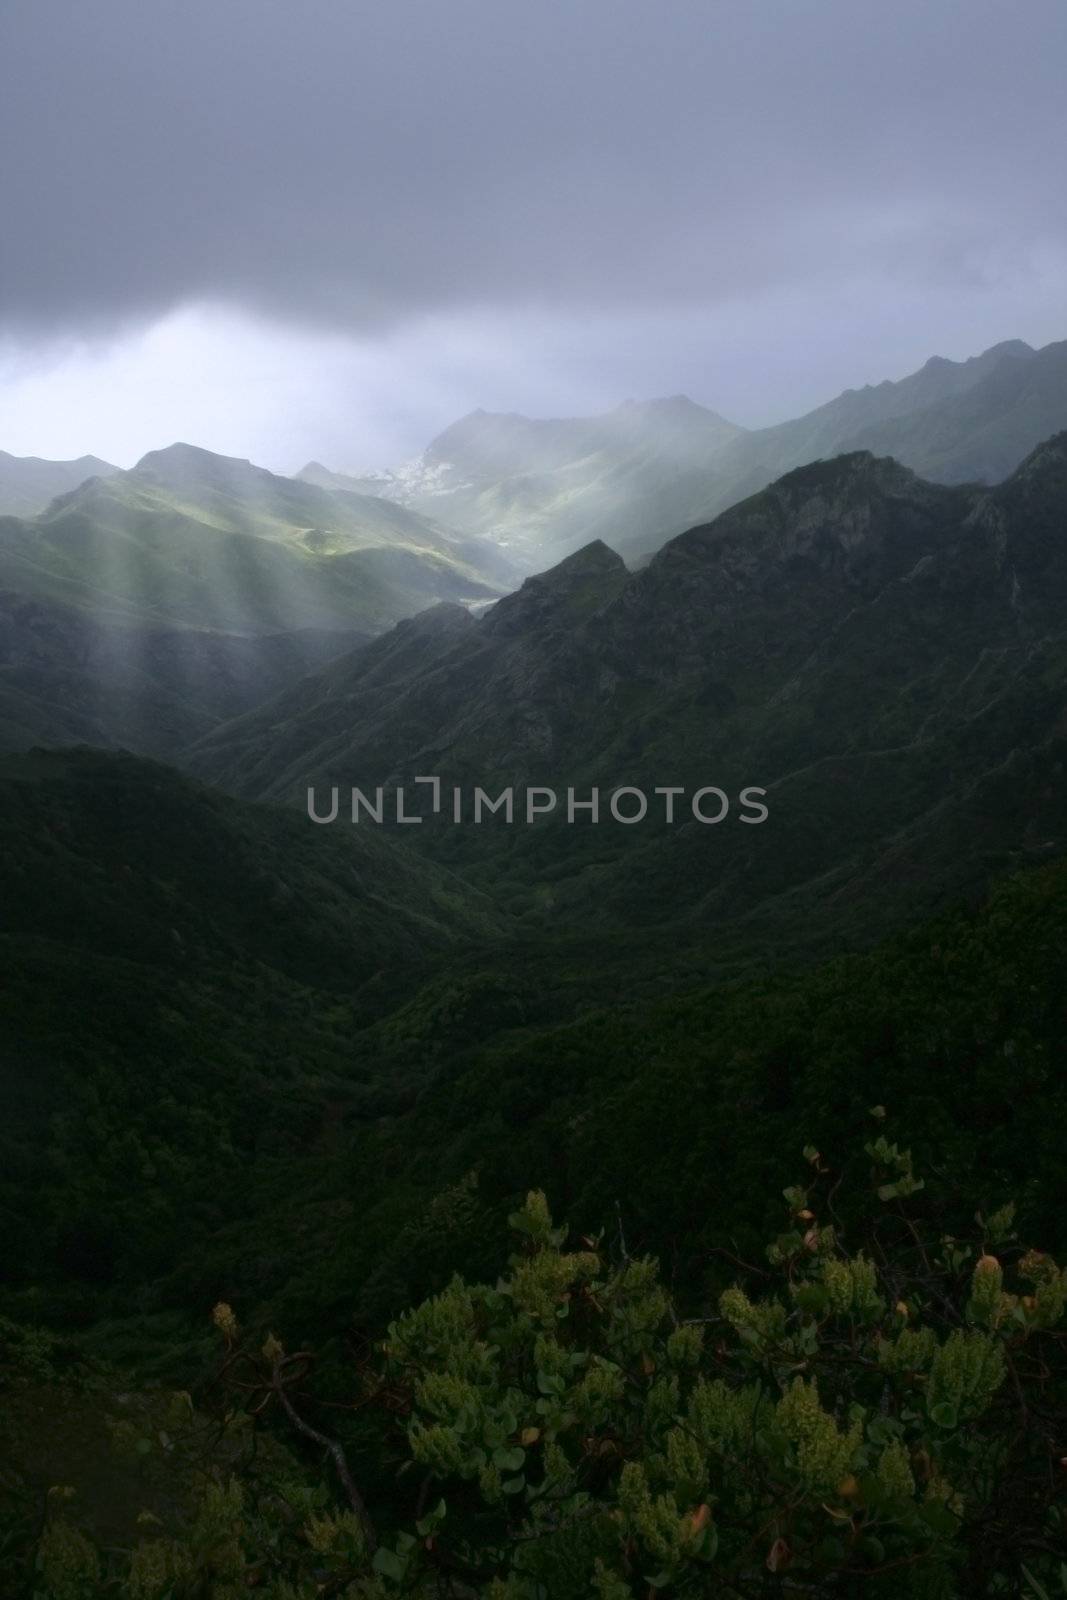 Light on distant mountains by anterovium